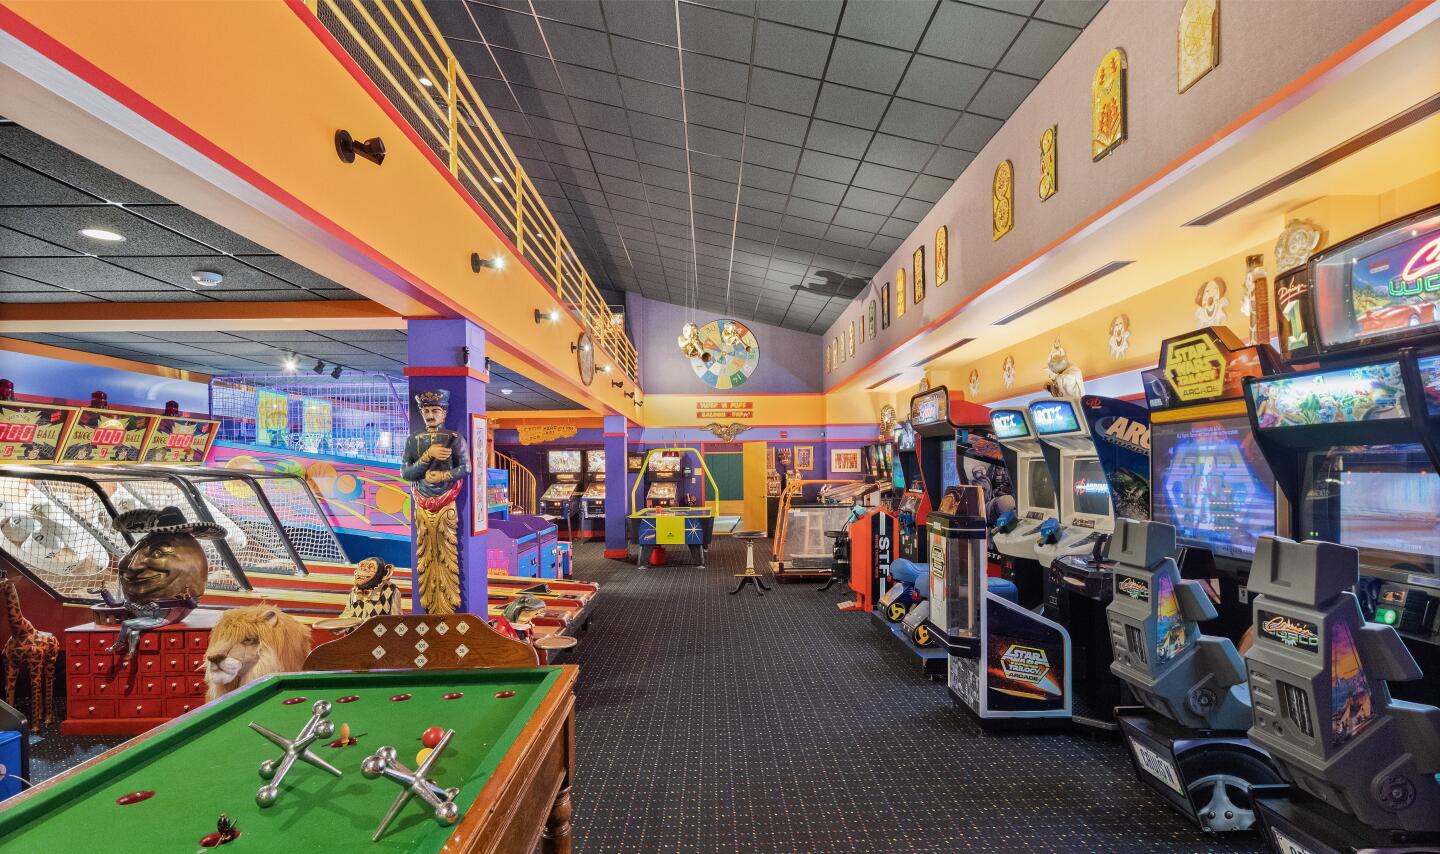 The arcade.